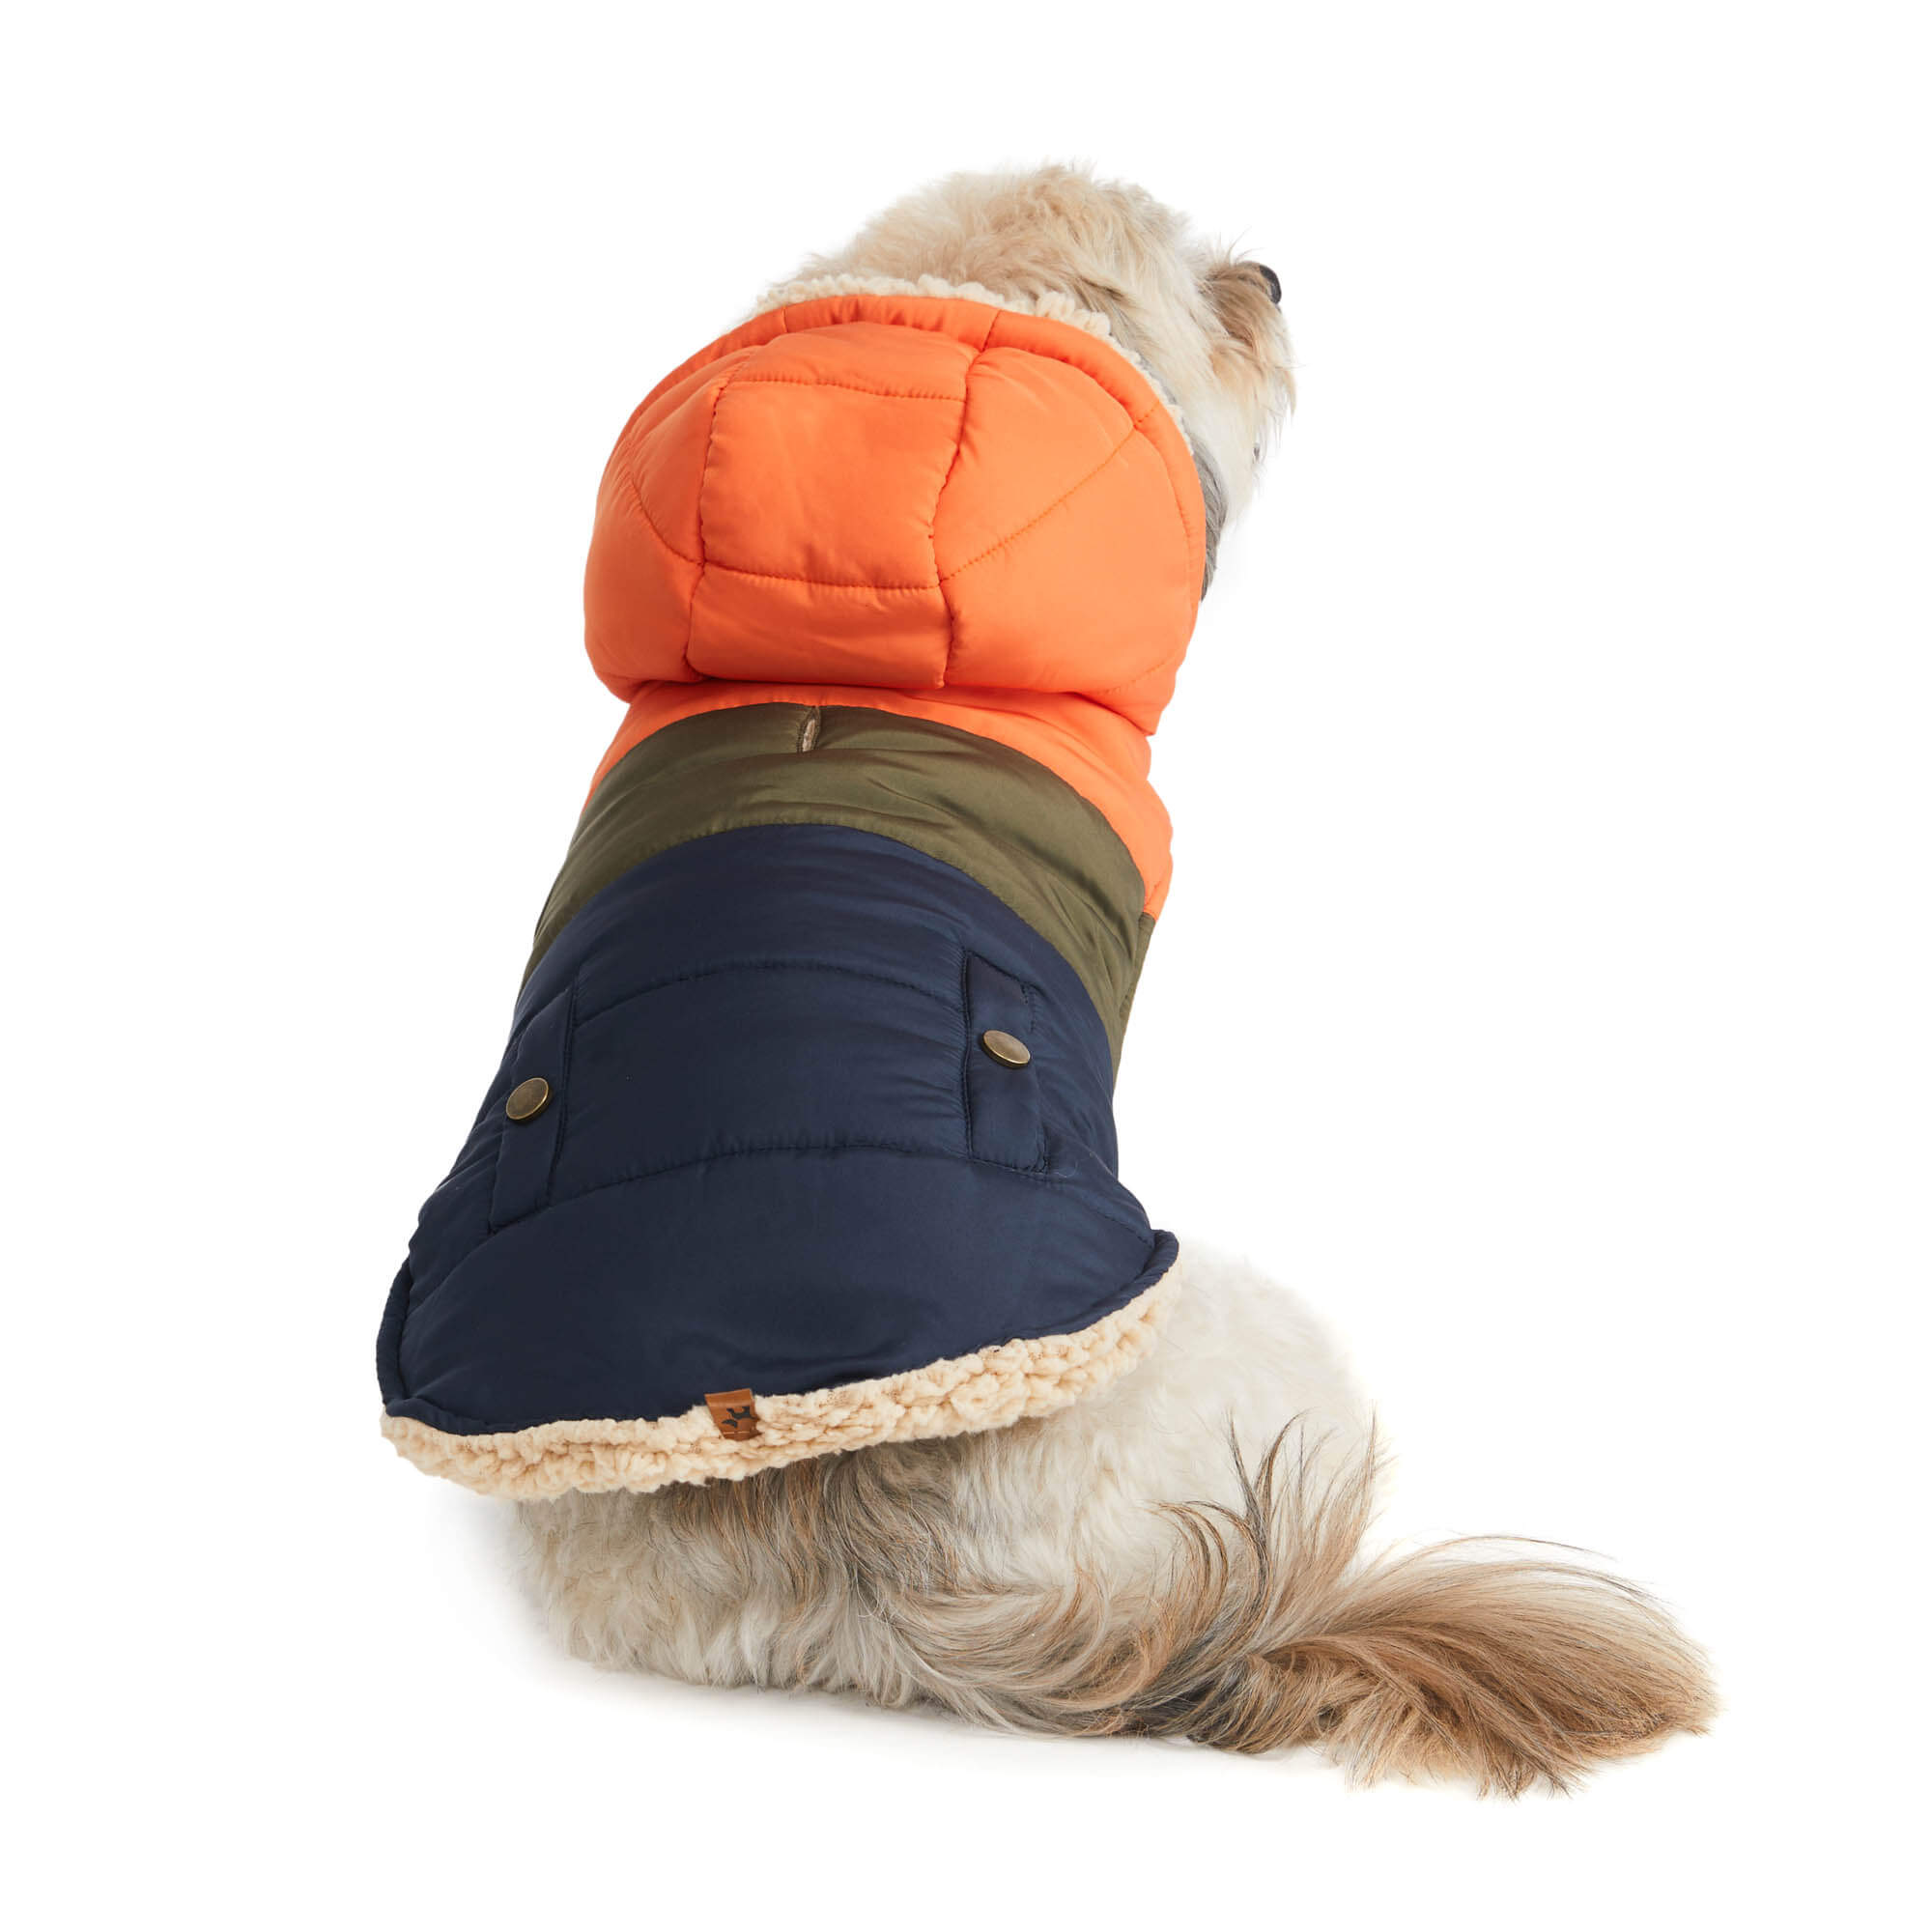 Dog wearing orange and blue parka. Back view